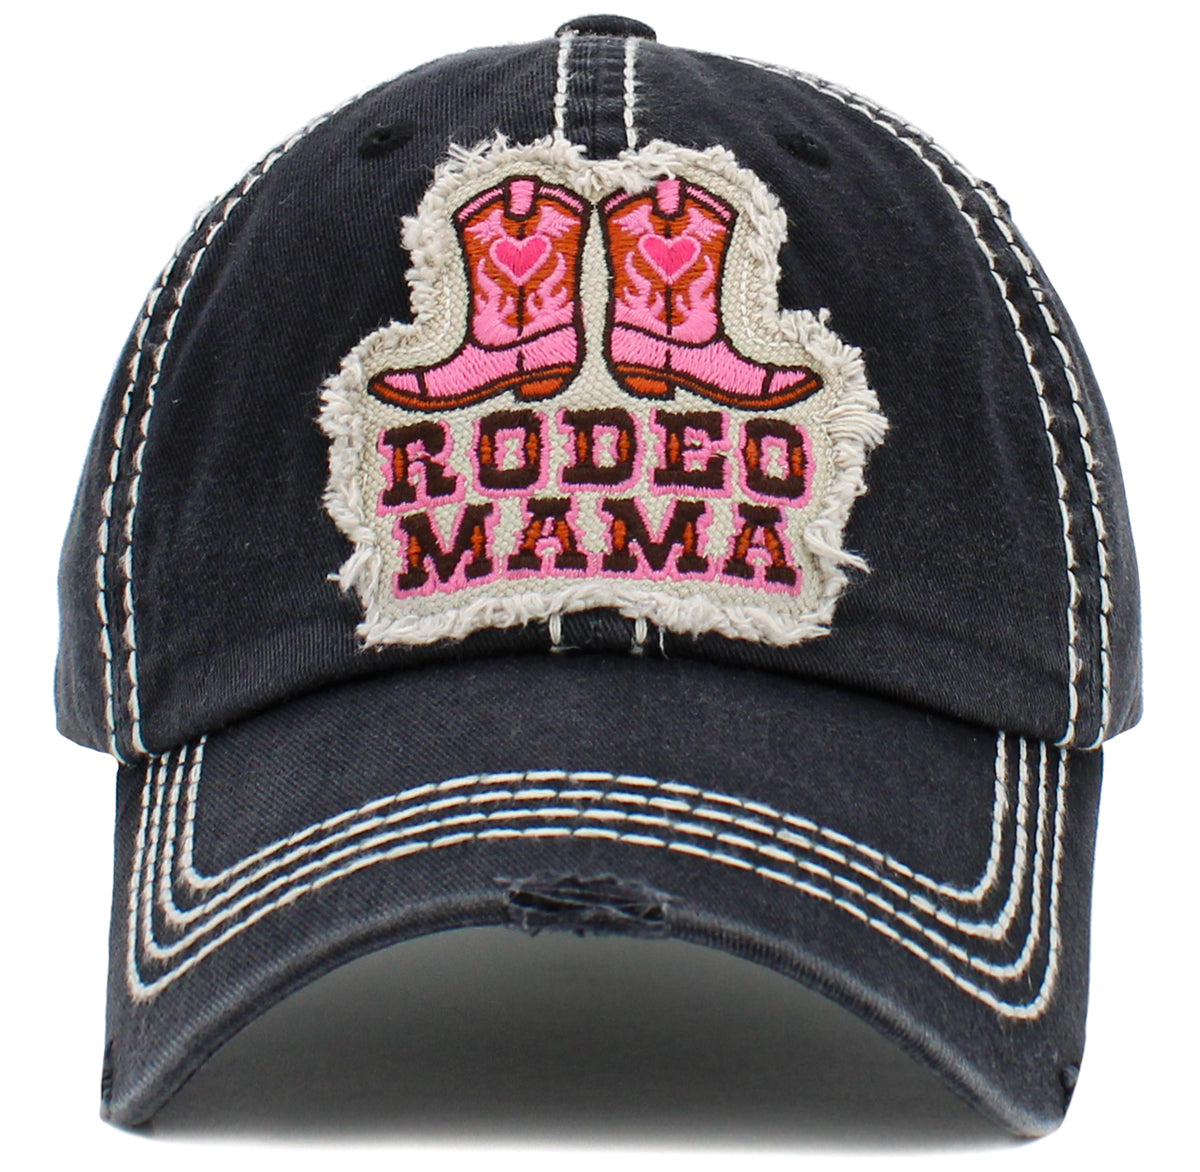 KBV1478 'Rodeo MaMa" Washed vintage Ballcap